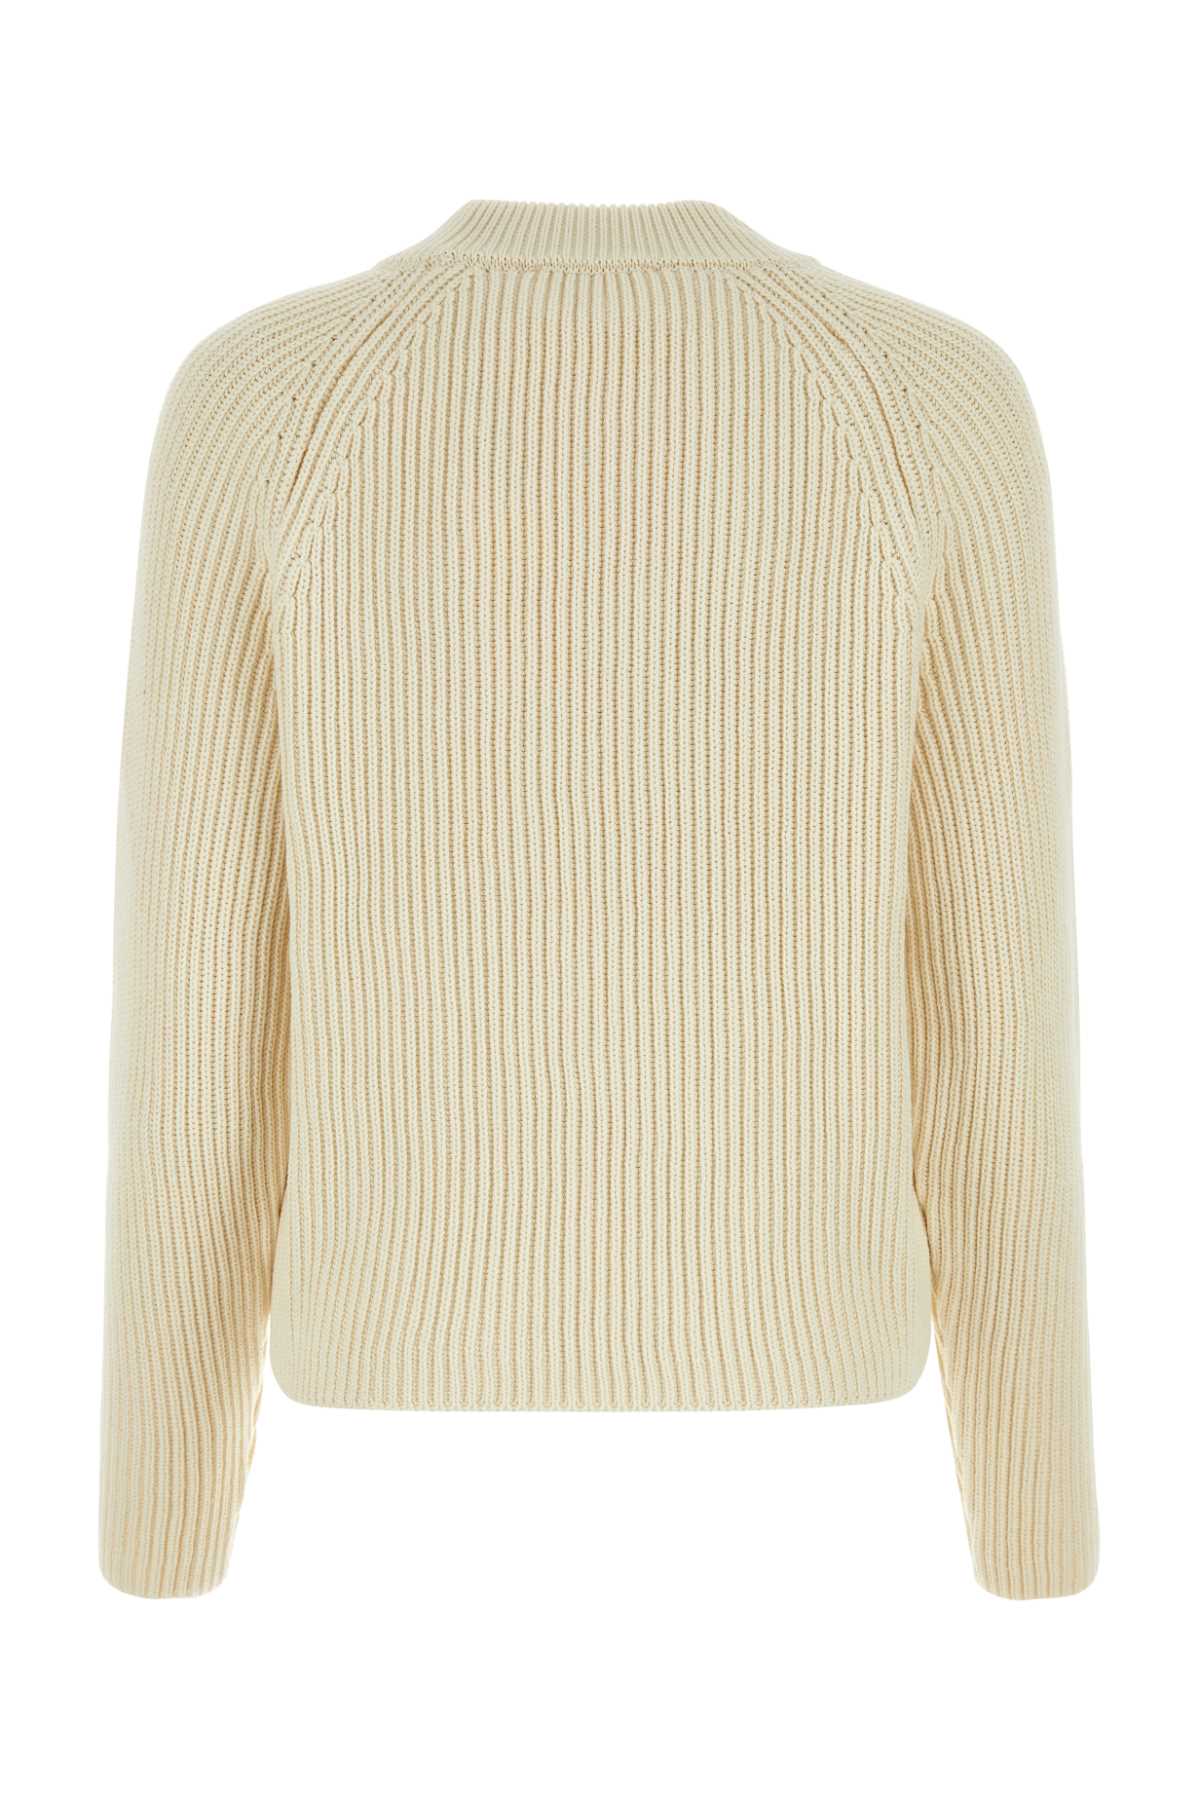 Ami Alexandre Mattiussi Ivory Cotton Blend Sweater